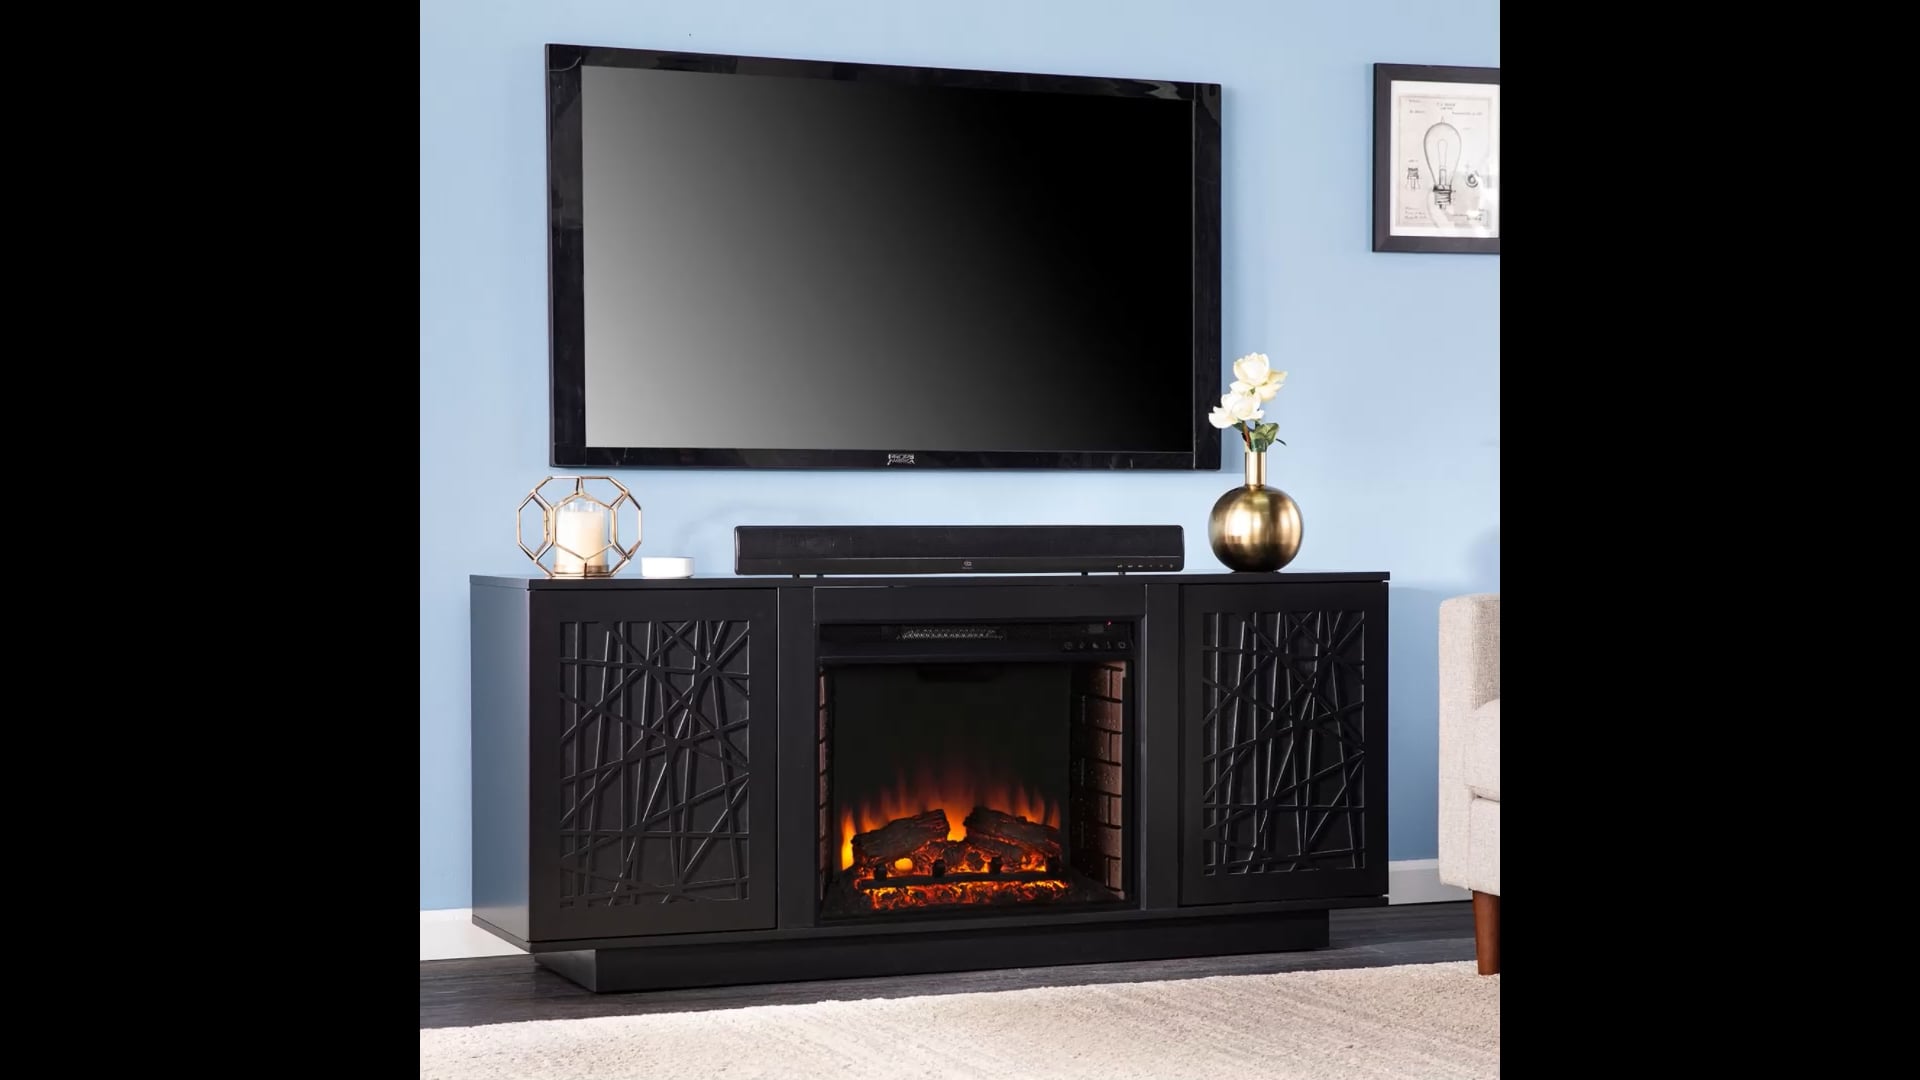 Vivian Electric Media Fireplace With Storage, Black